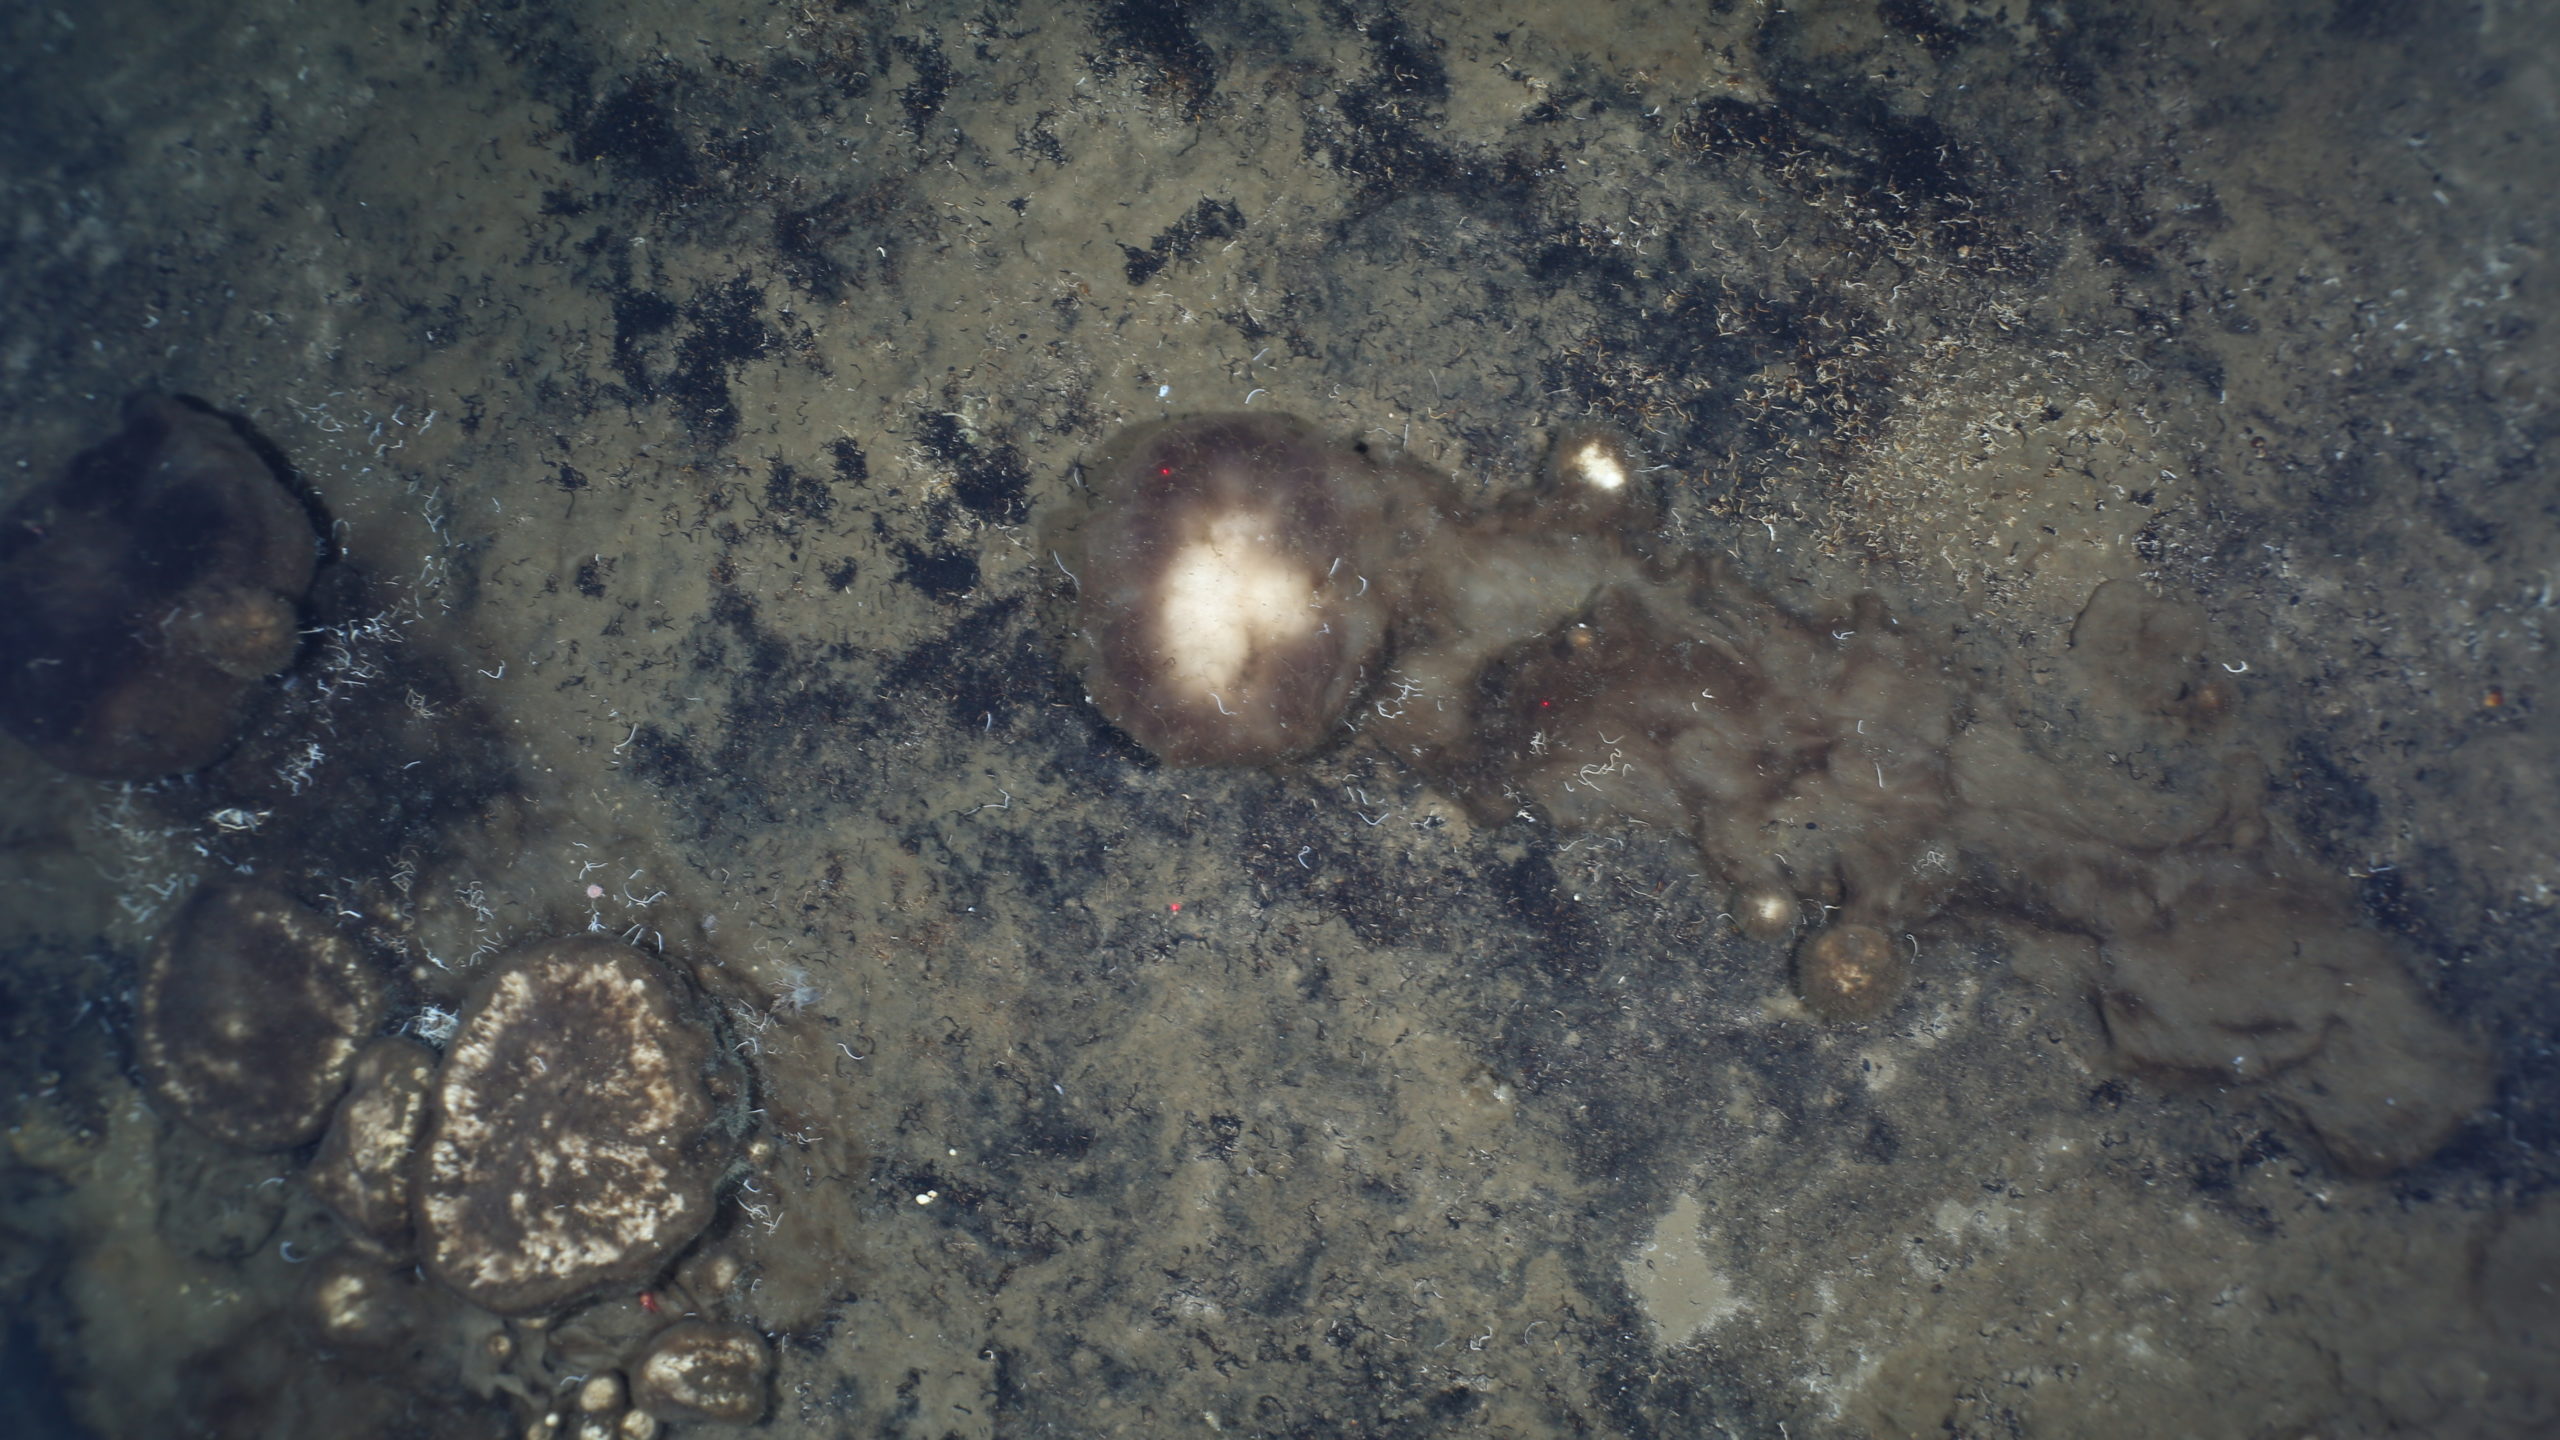 A deep sea sponge with its trail. (Image: AWI OFOBS team, PS101)